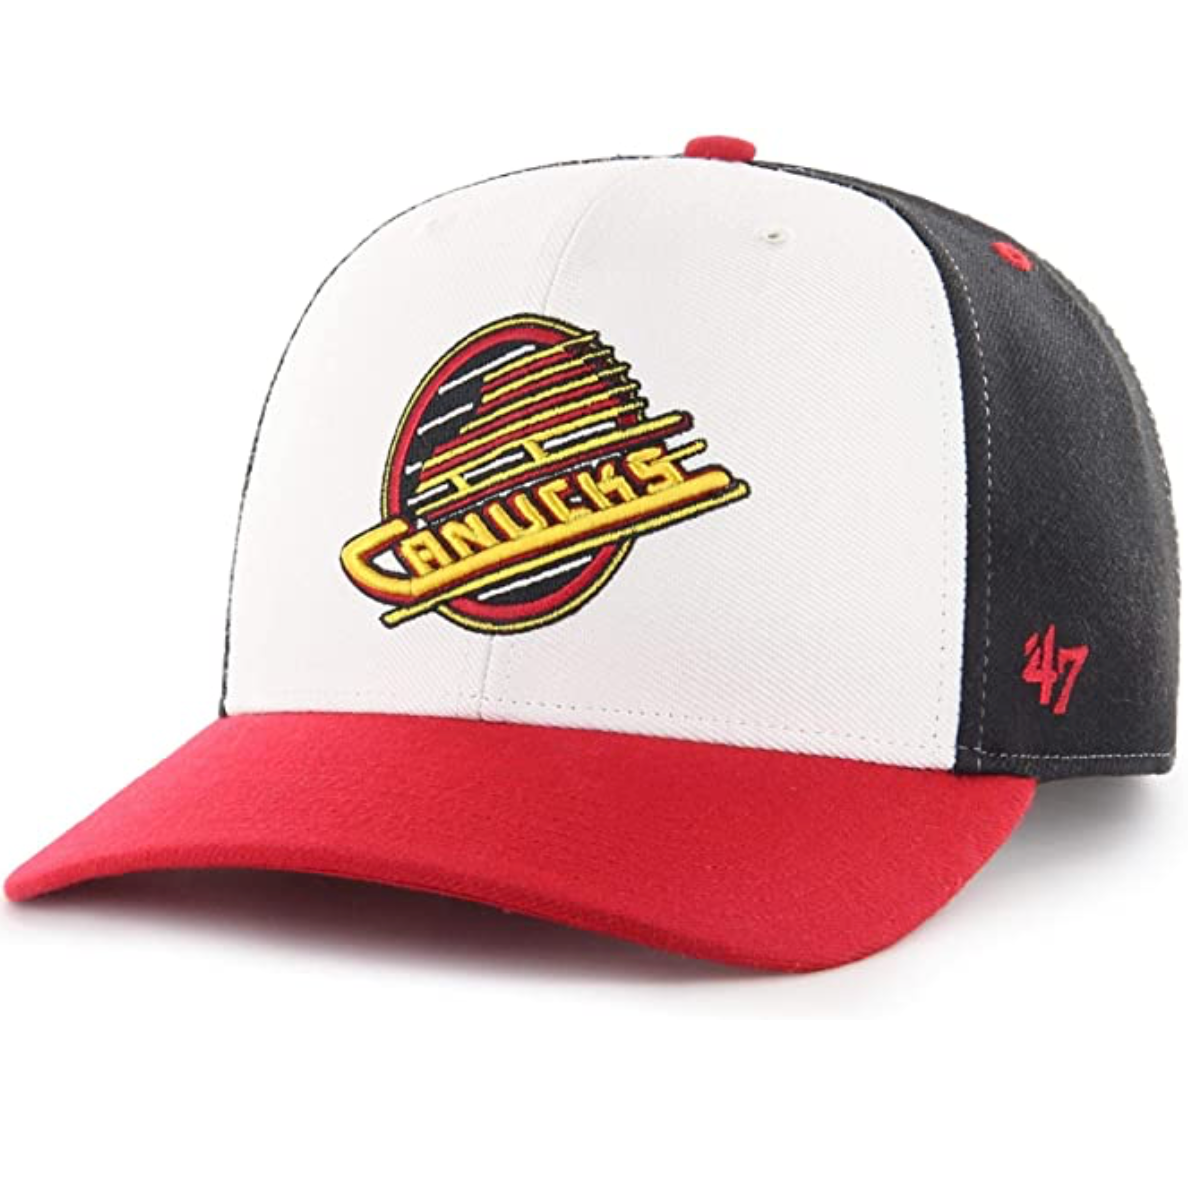 '47 Brand - Vancouver Canucks Vintage Hat - Red / White